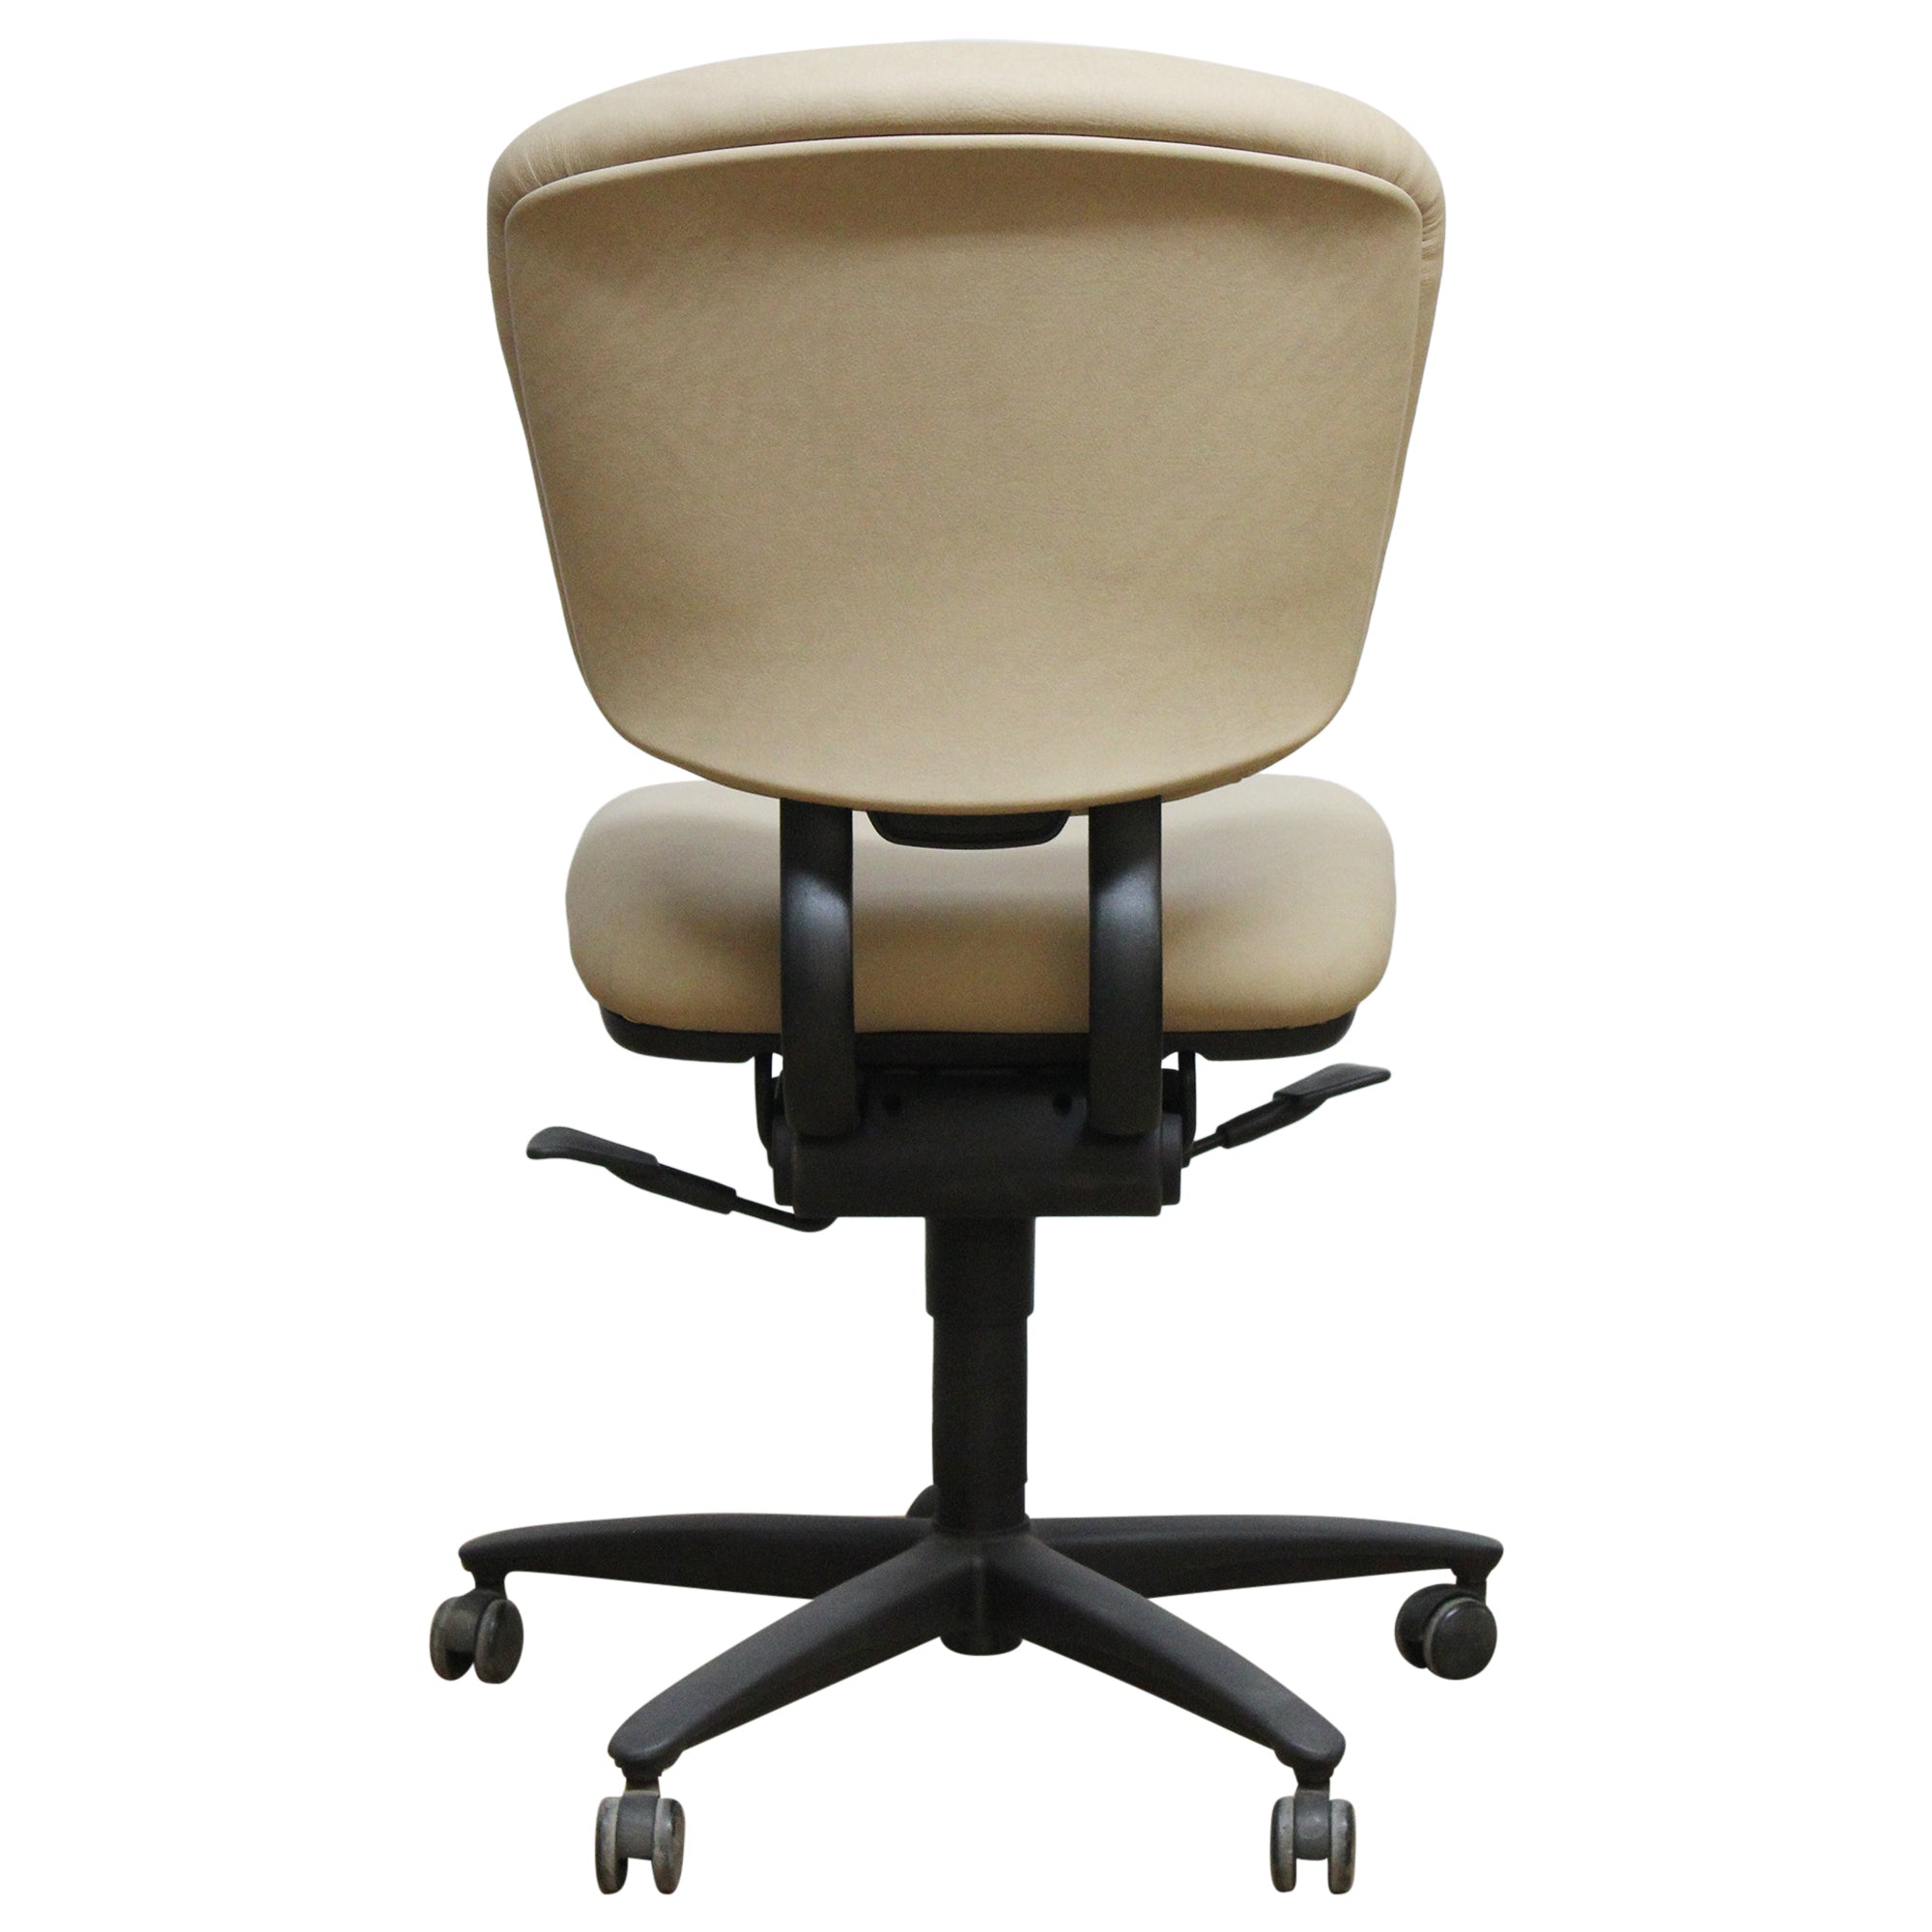 Haworth Improv Armless Task Chair, Beige - Preowned